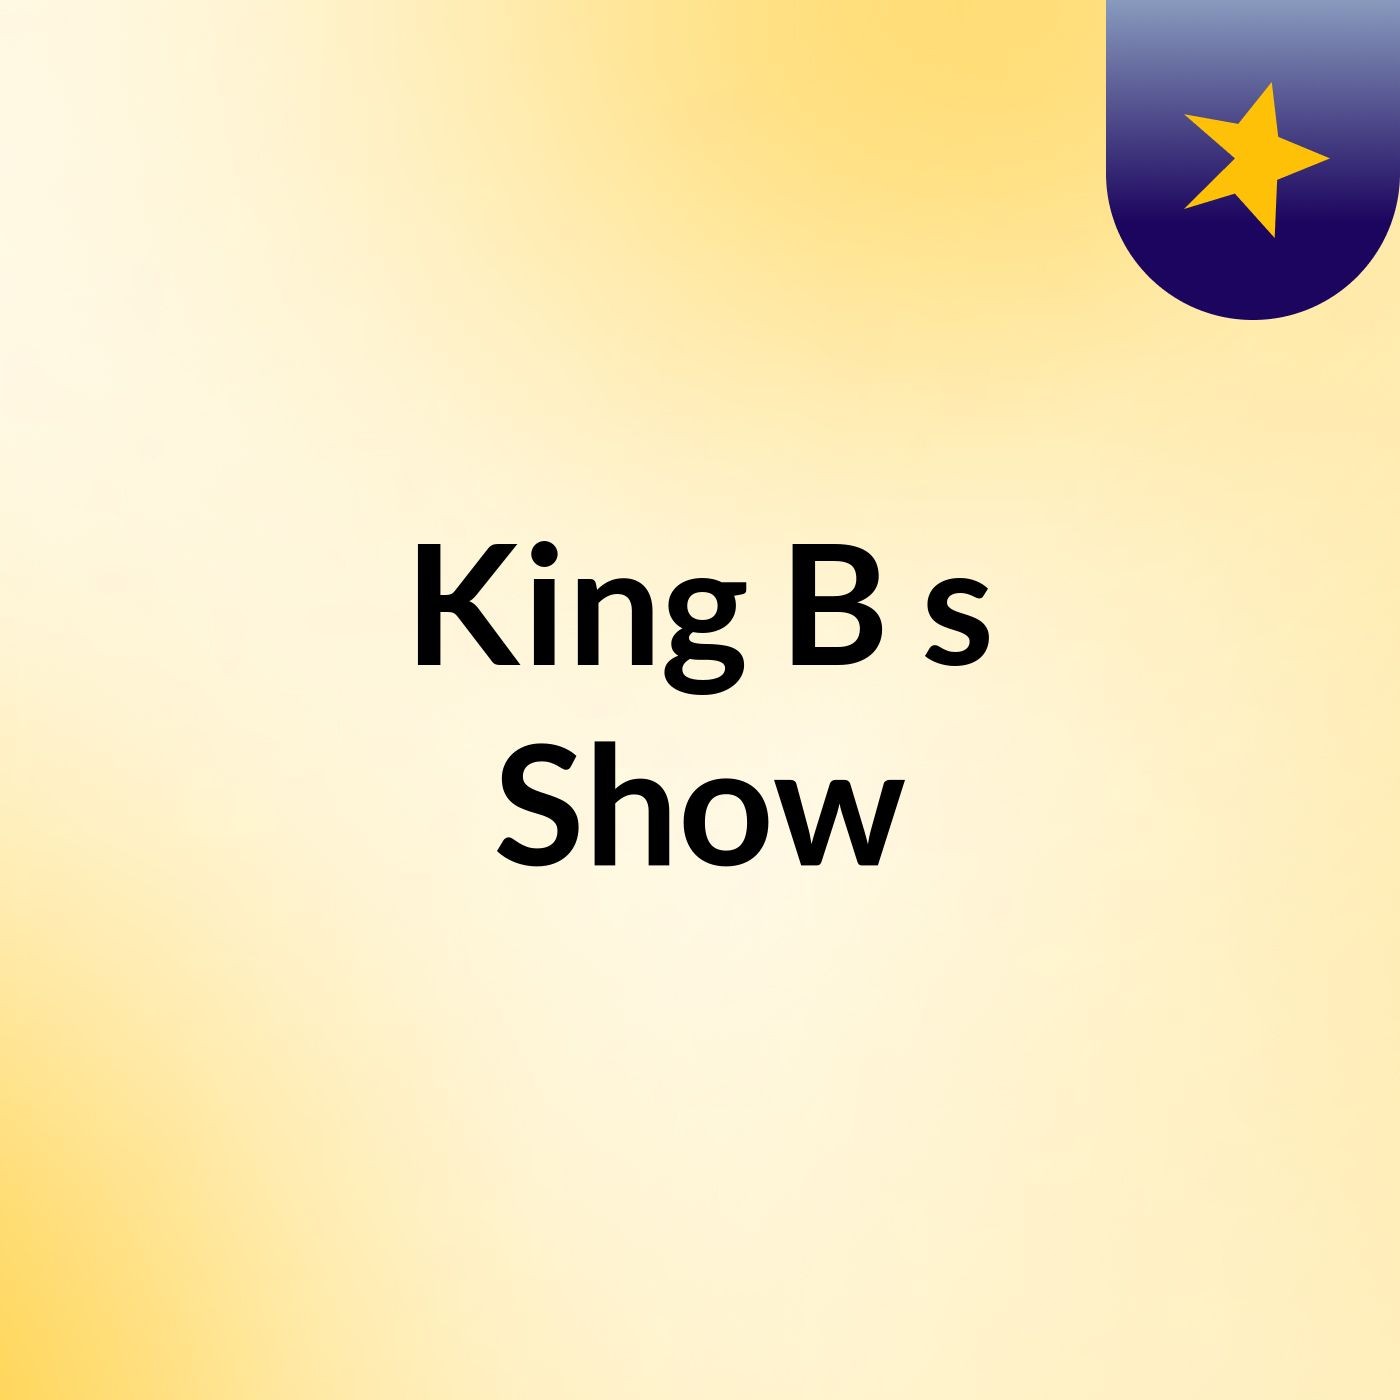 King B's Show